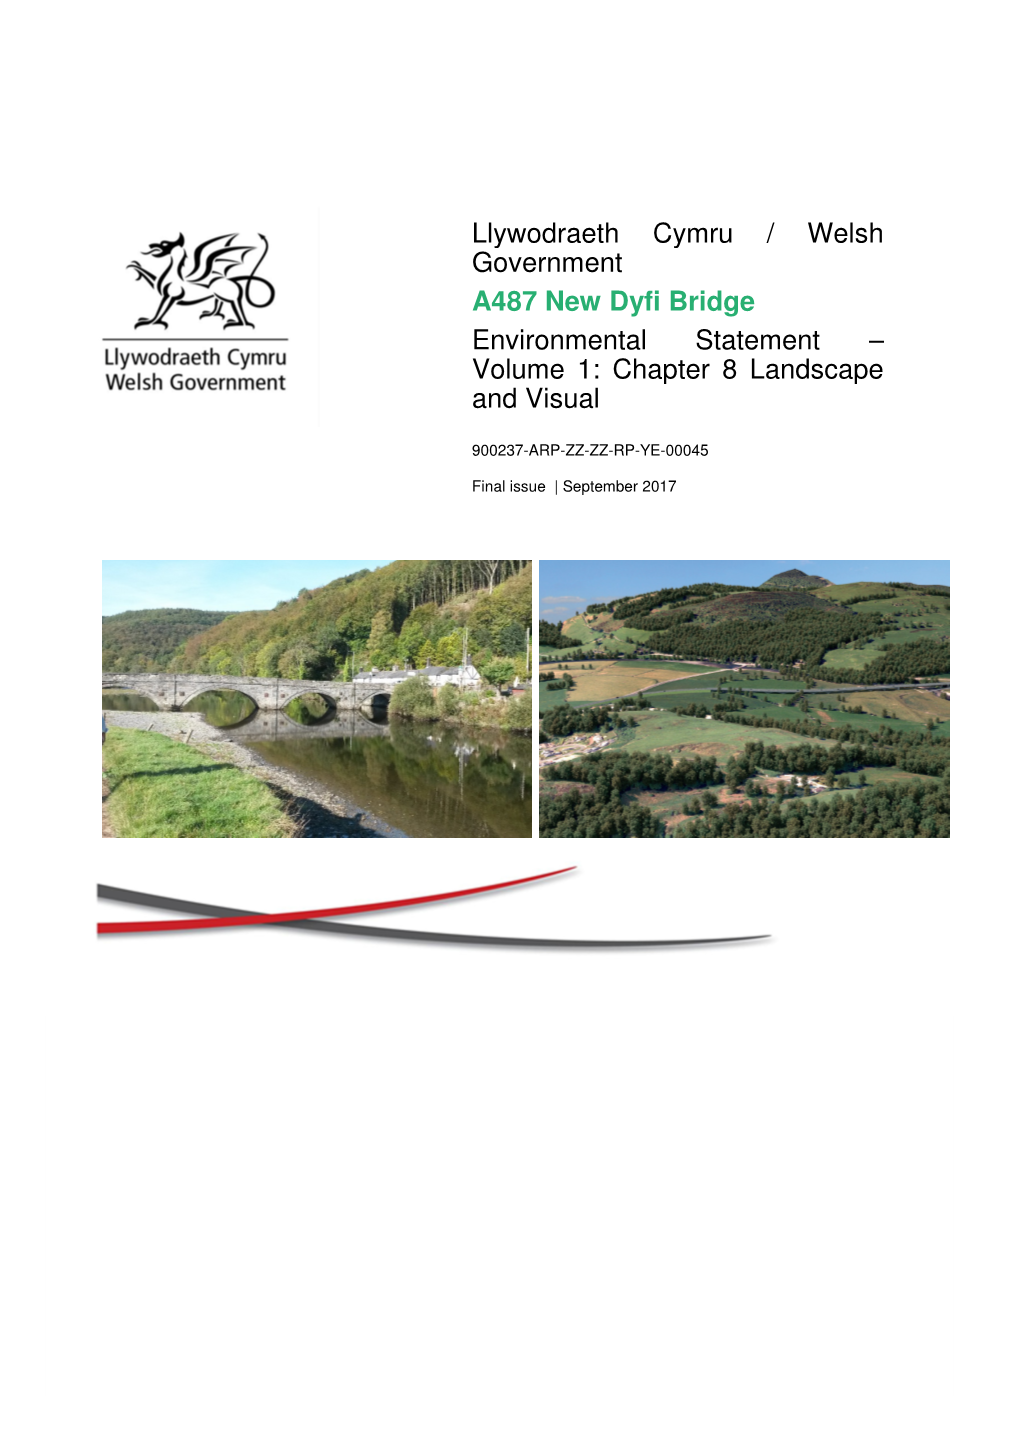 Llywodraeth Cymru / Welsh Government A487 New Dyfi Bridge Environmental Statement – Volume 1: Chapter 8 Landscape and Visual